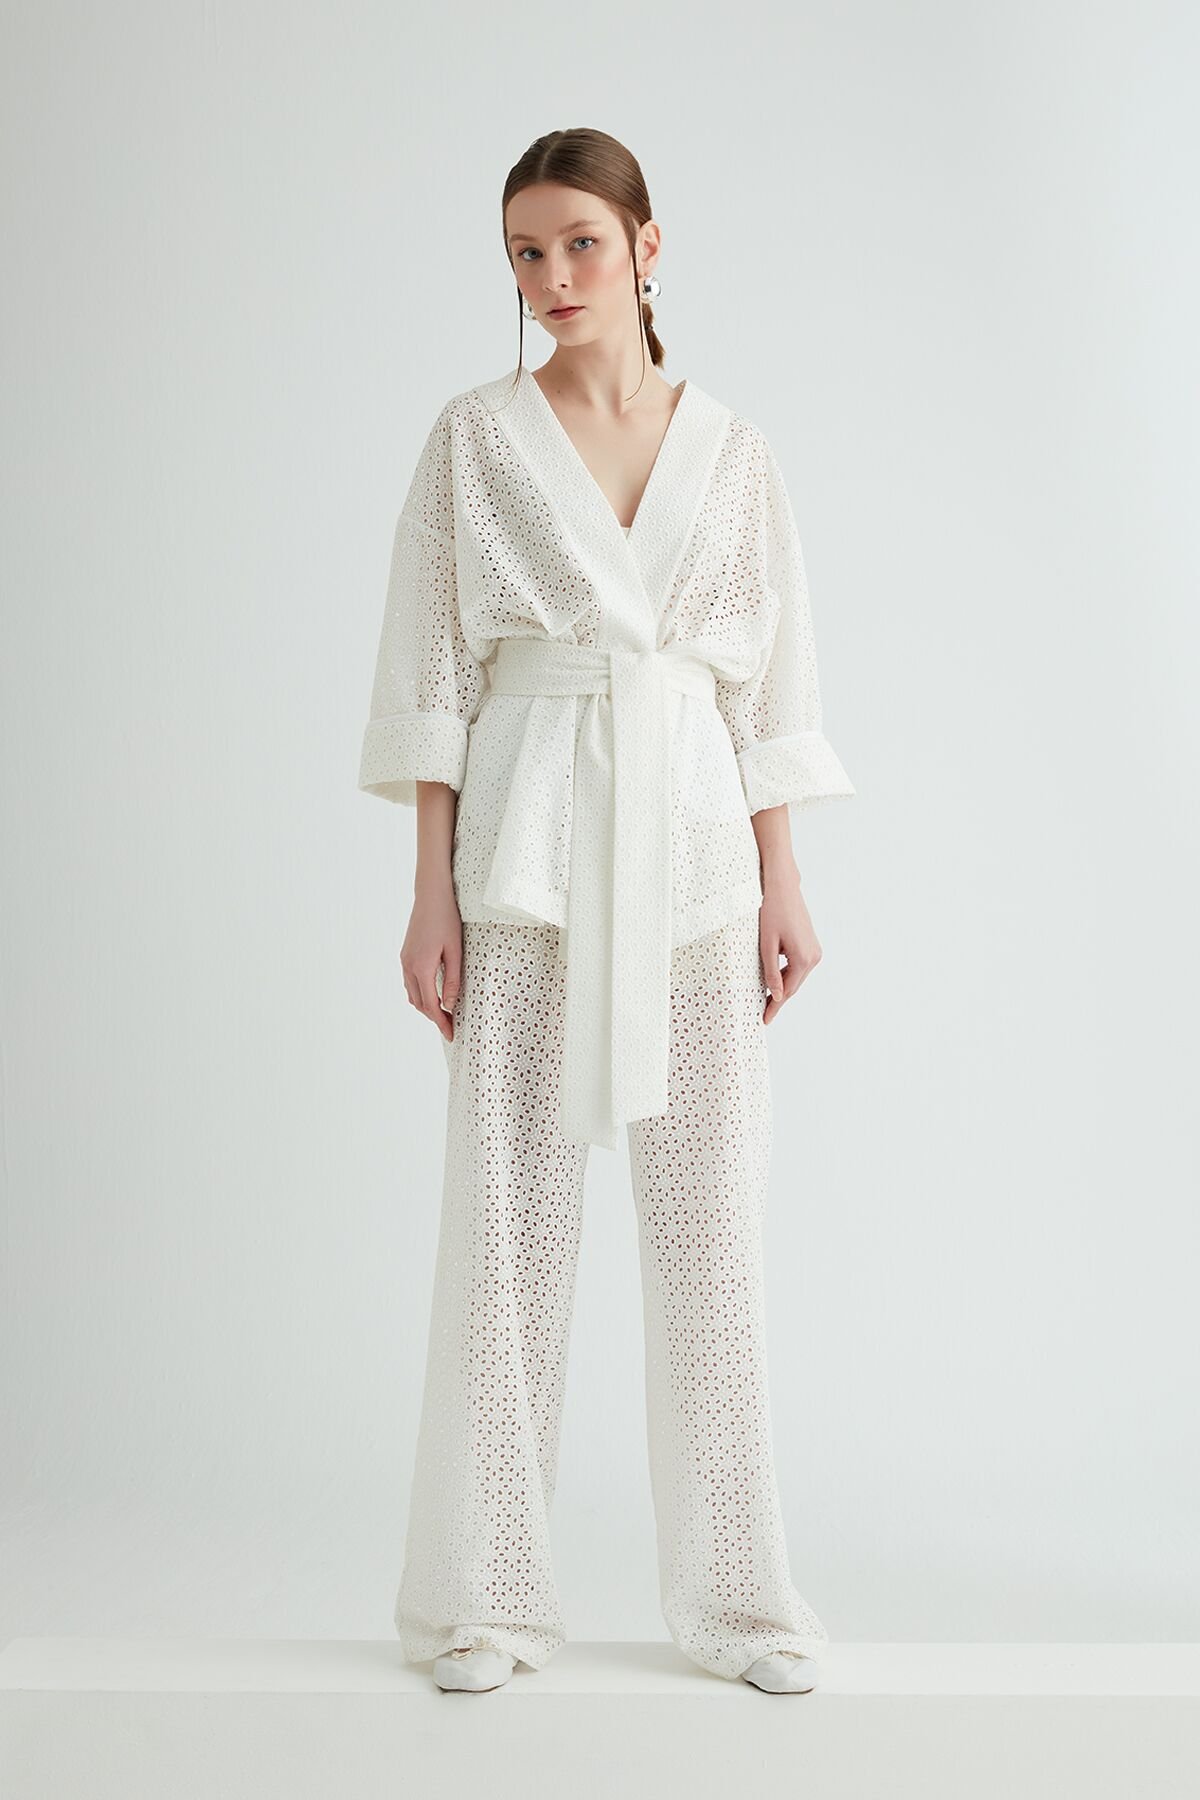 Lace Kimono Style Ecru Jacket